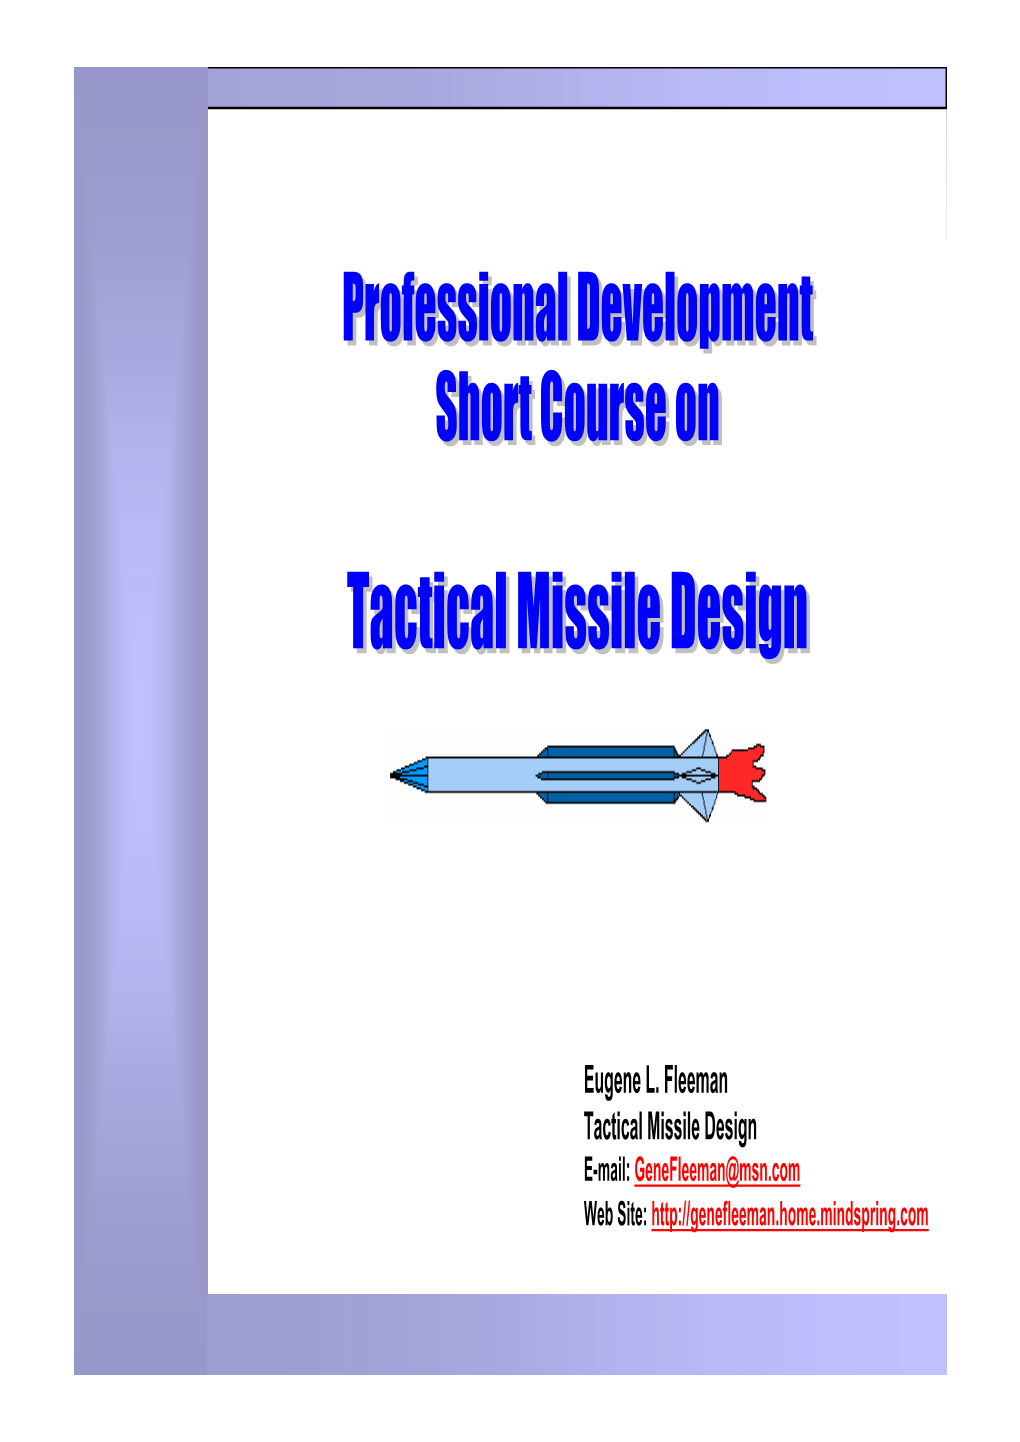 Eugene L. Fleeman Tactical Missile Design E-Mail: Genefleeman@Msn.Com Web Site